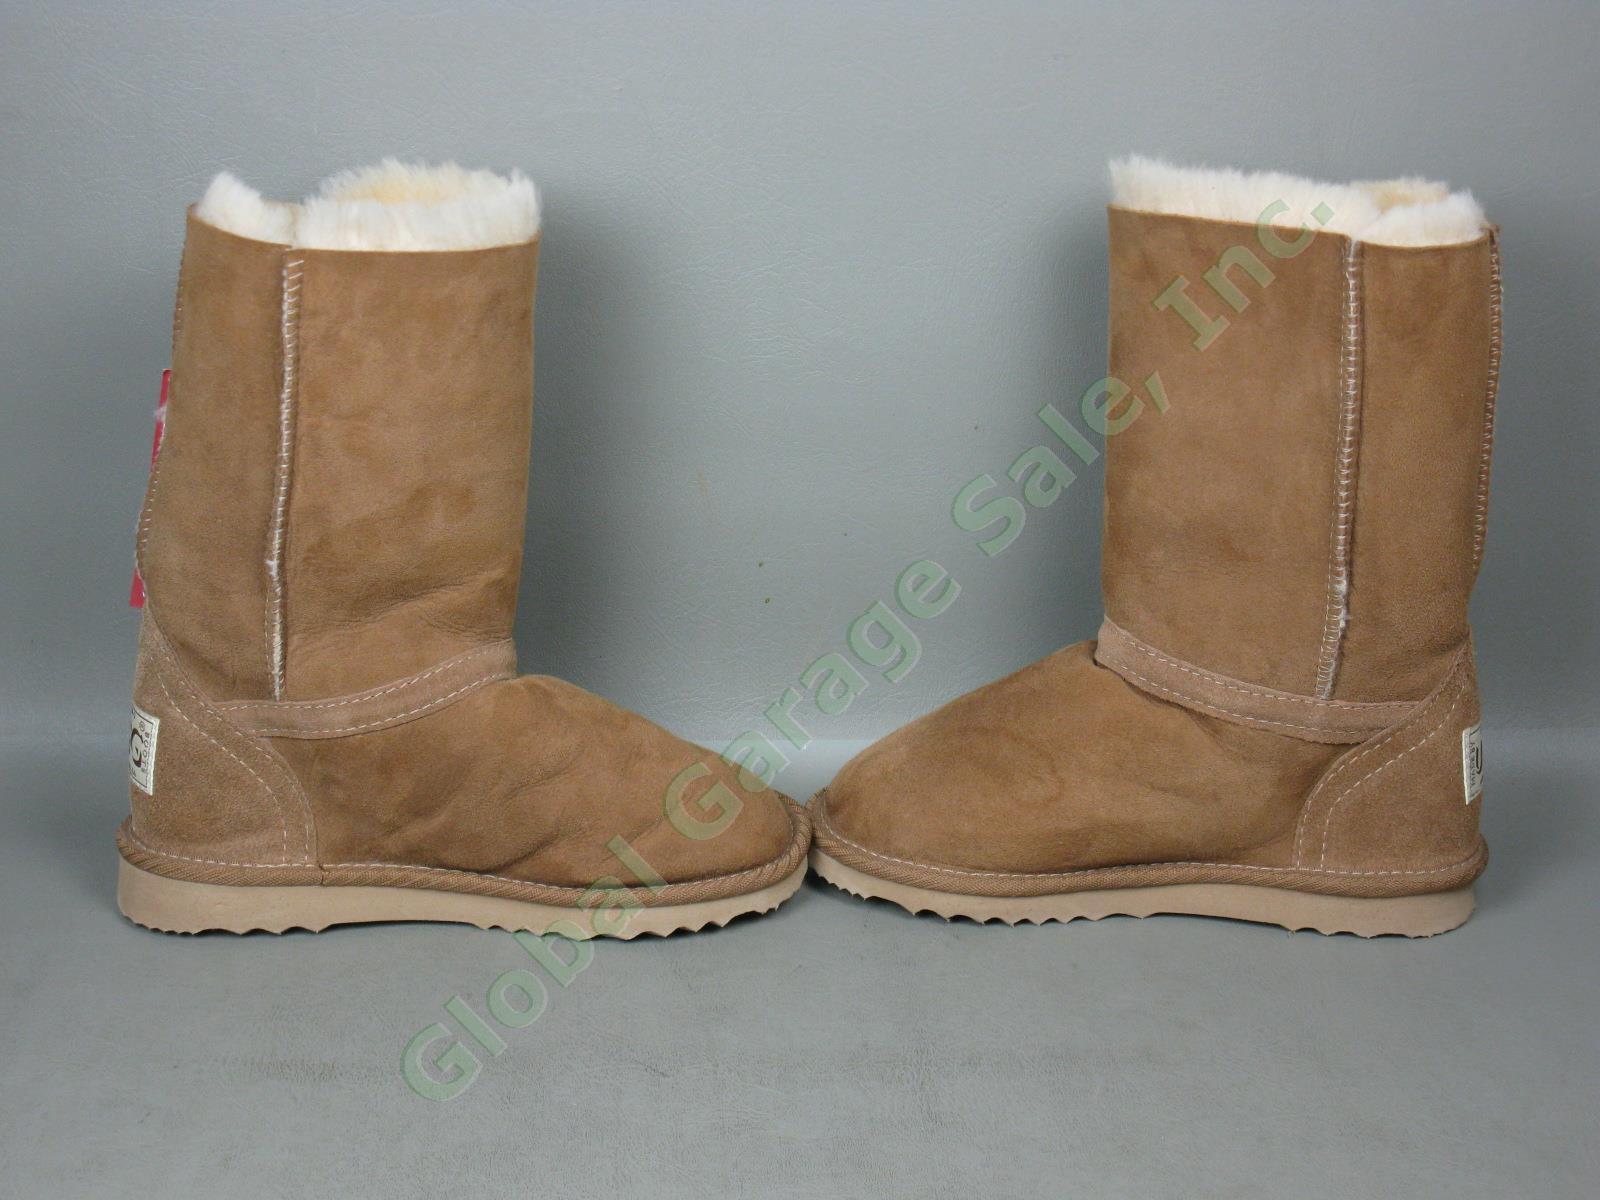 NWT Ladies Womens UGG Sheepskin Tall Button Boots w/Tags US 5-6 5.5 UK 3 EU 35.5 4